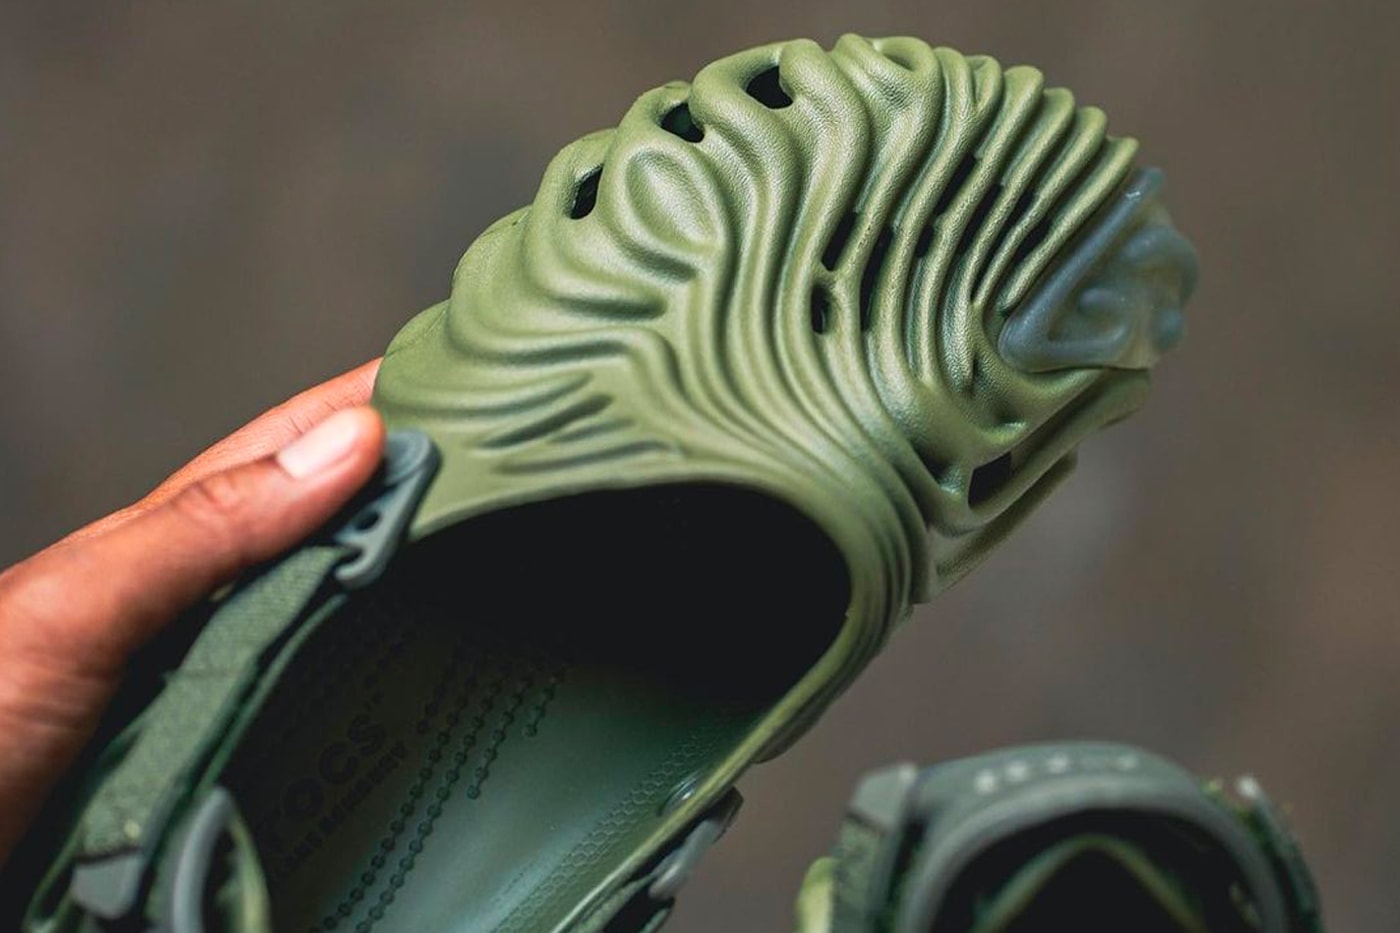 Salehe Bembury Reveals Crocodile Green and Light Mocha Crocs Classic Clogs fingerprint Be a Spunge label brand sandals shoes release date colorway summer